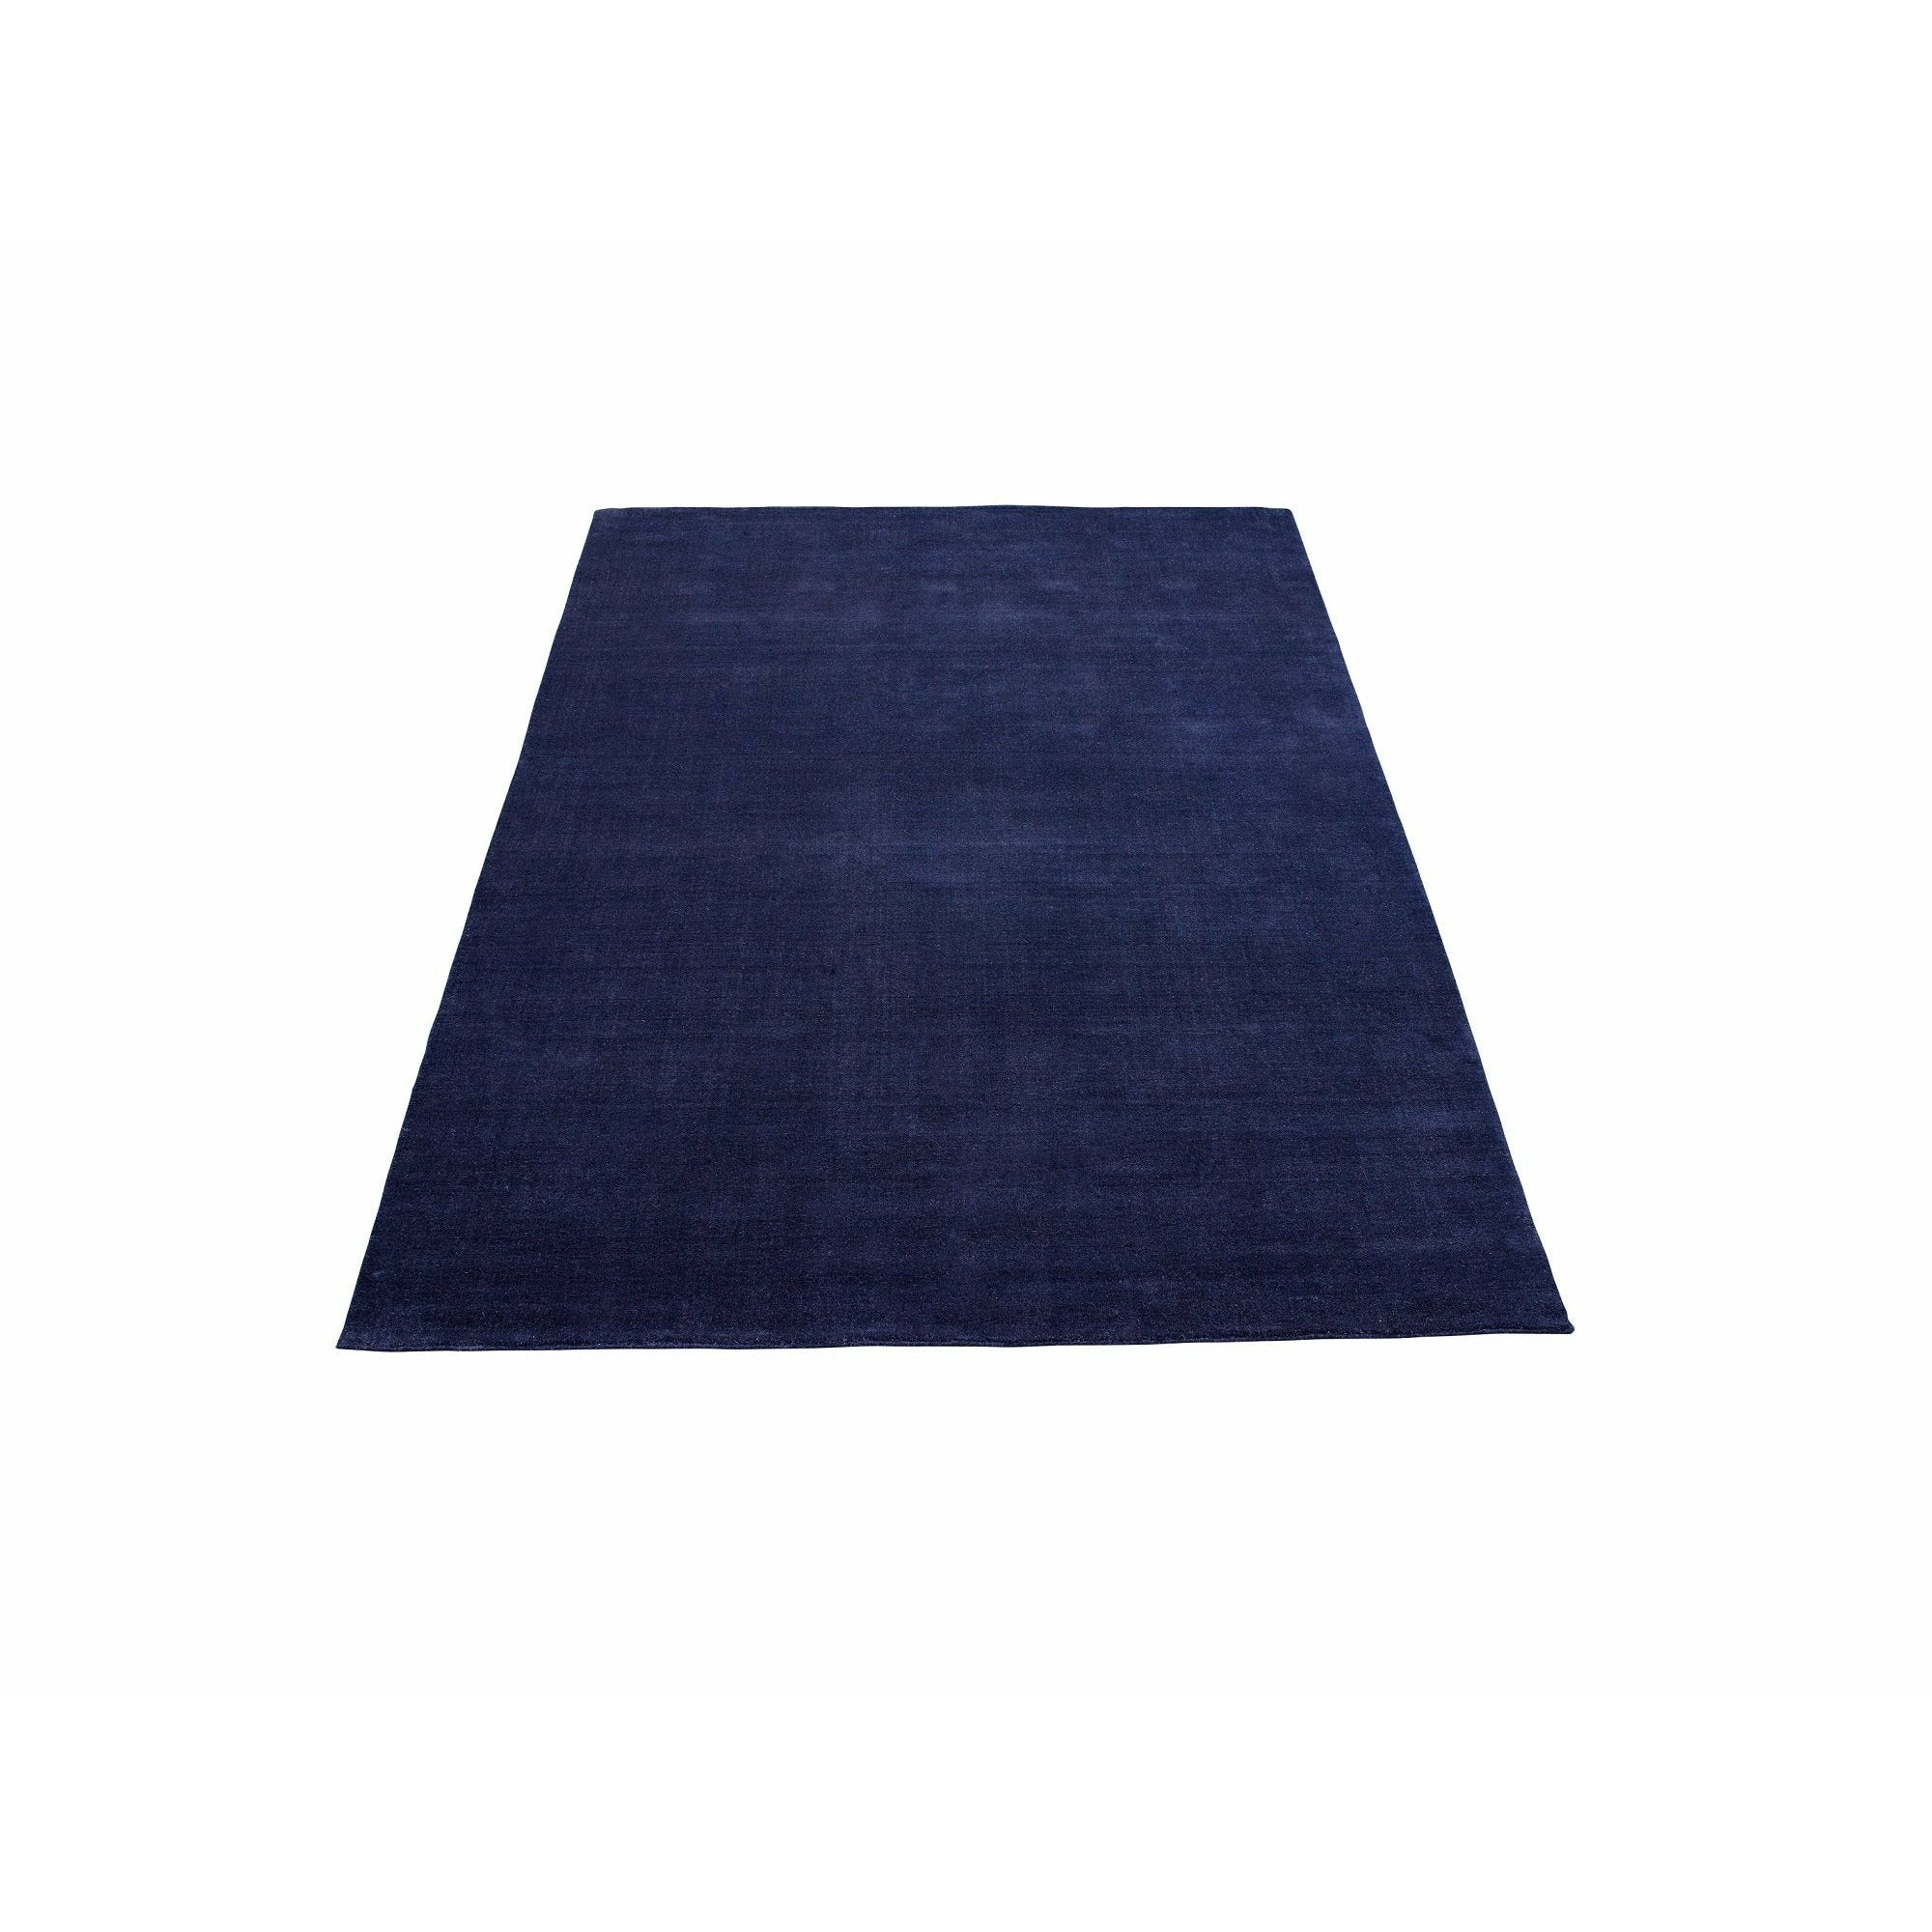 Massimo Earth Bamboo Teppich Vibrant Blue, 250x300 cm-Teppcihe-Massimo-5710080124194-1001012419-MAS-inwohn